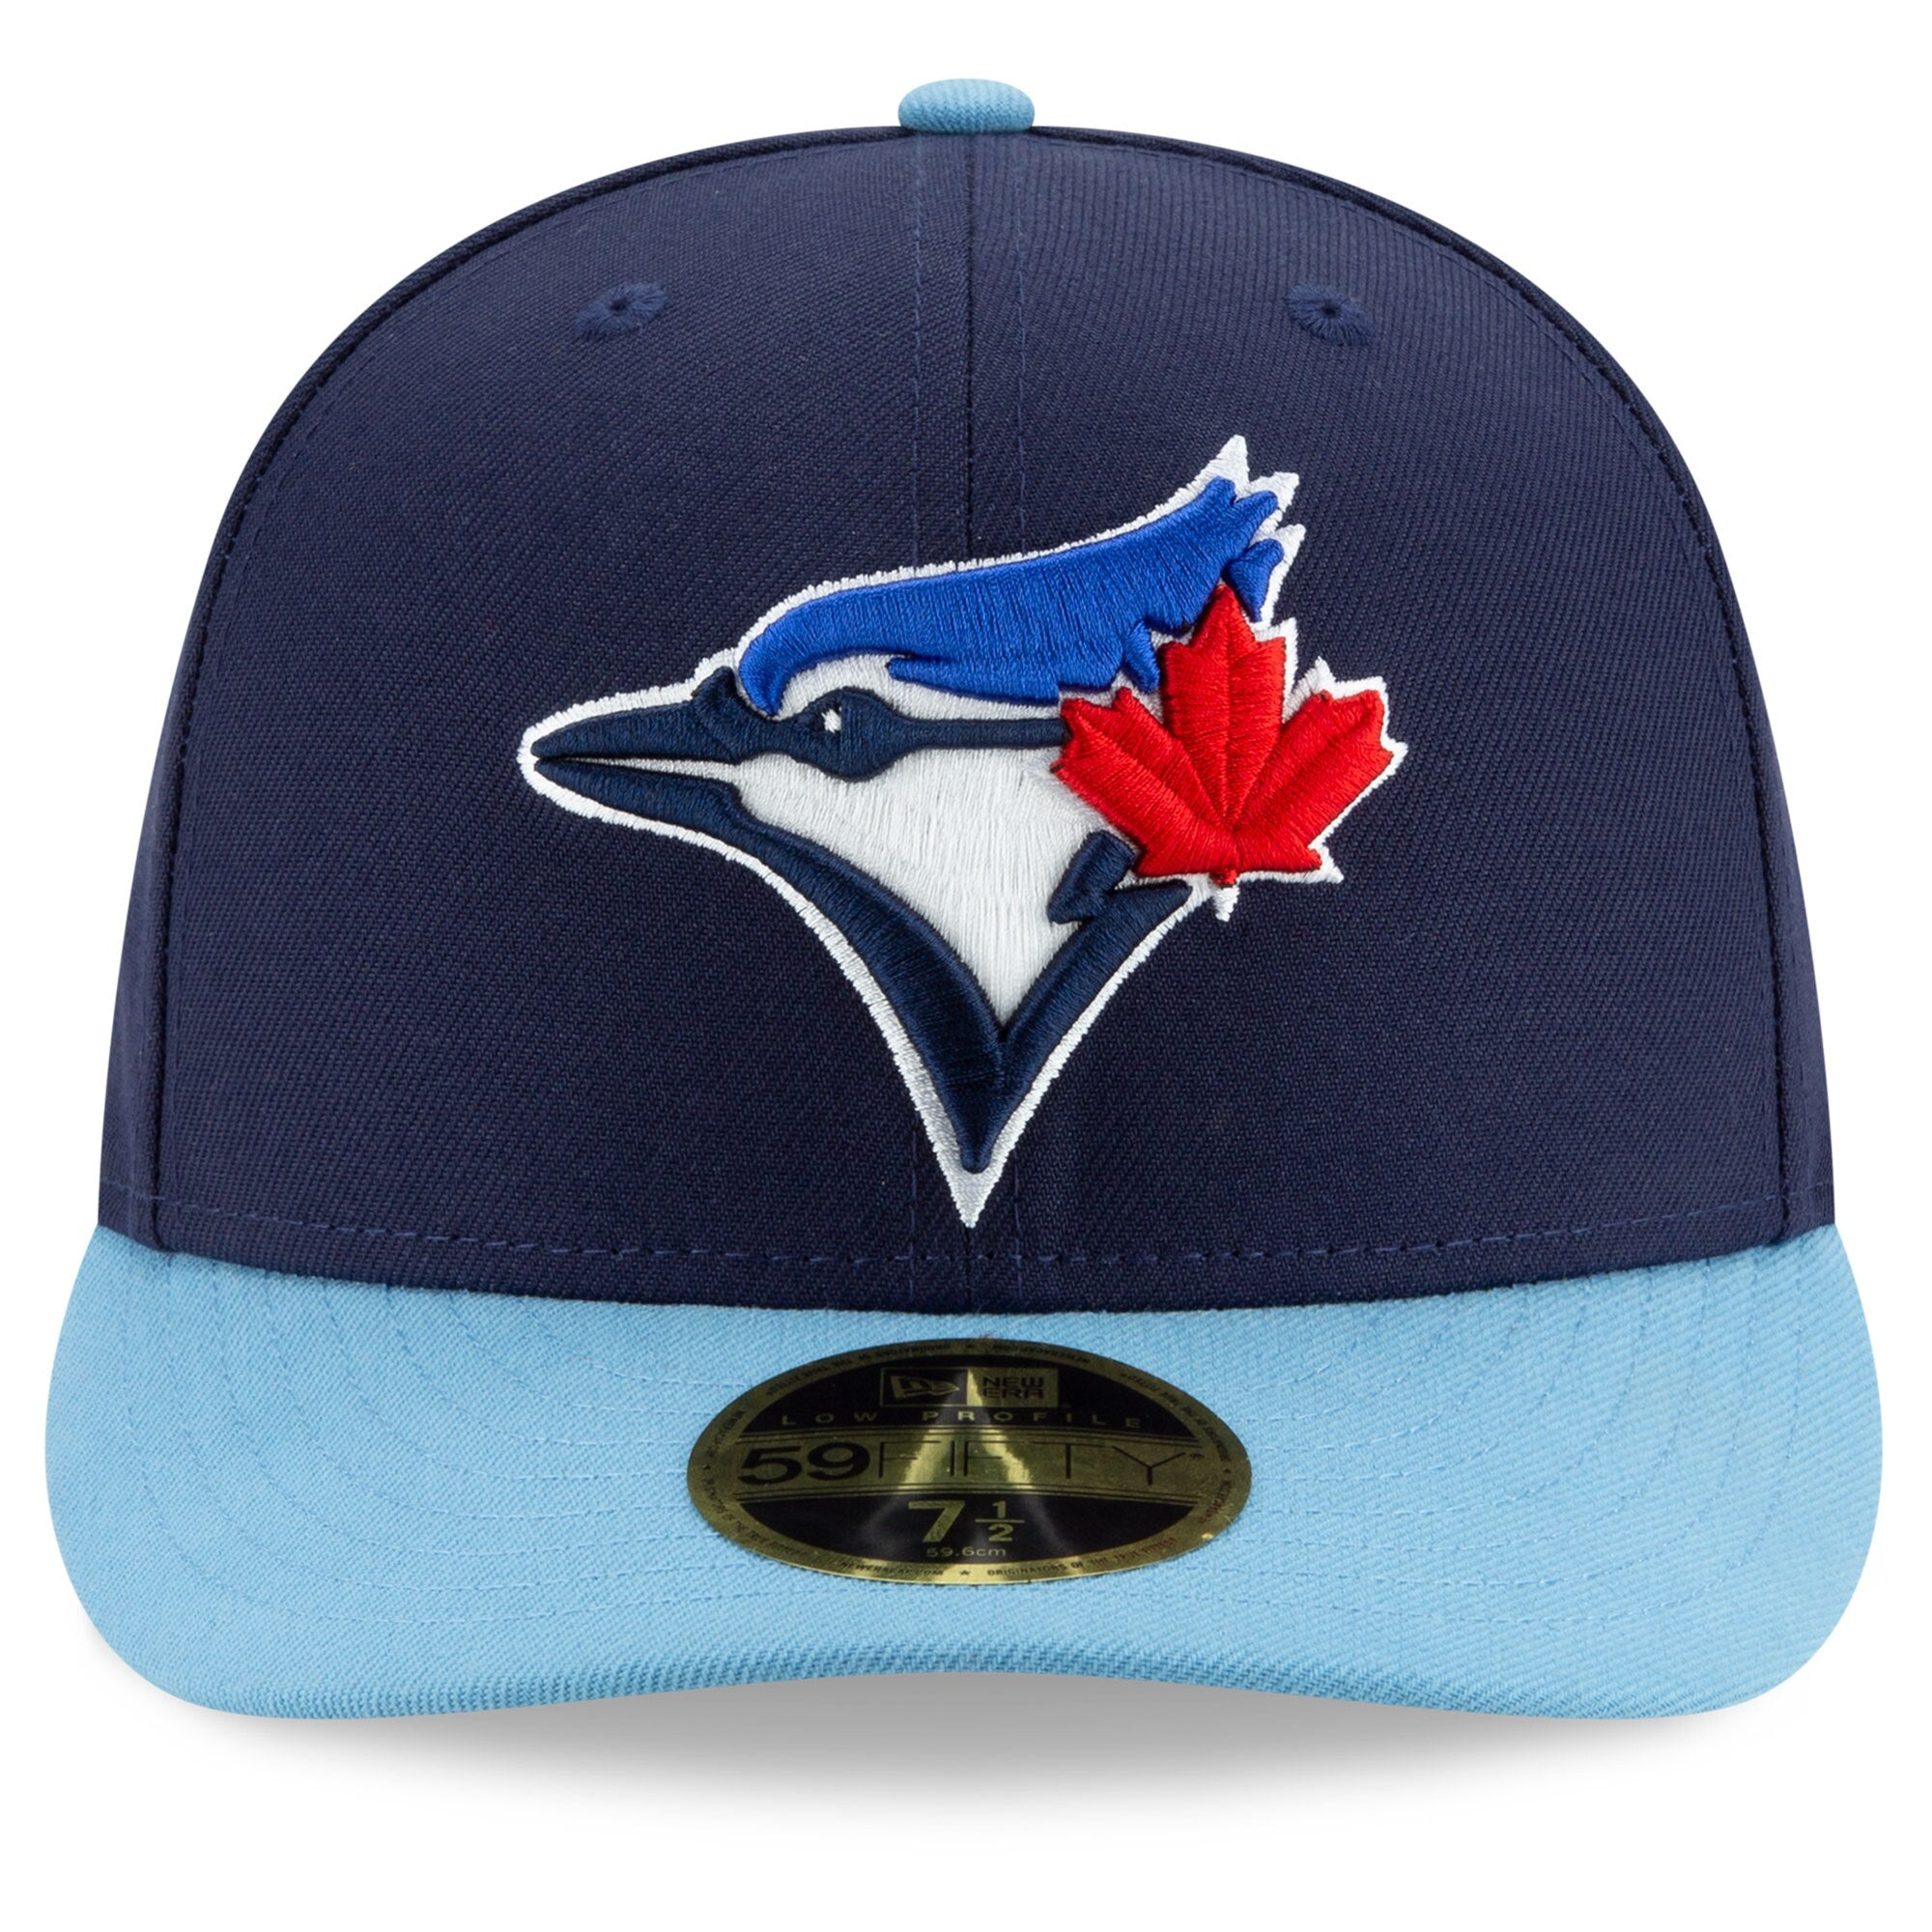 New Era Men's New Era Royal Toronto Blue Jays Monocamo 59FIFTY Fitted Hat